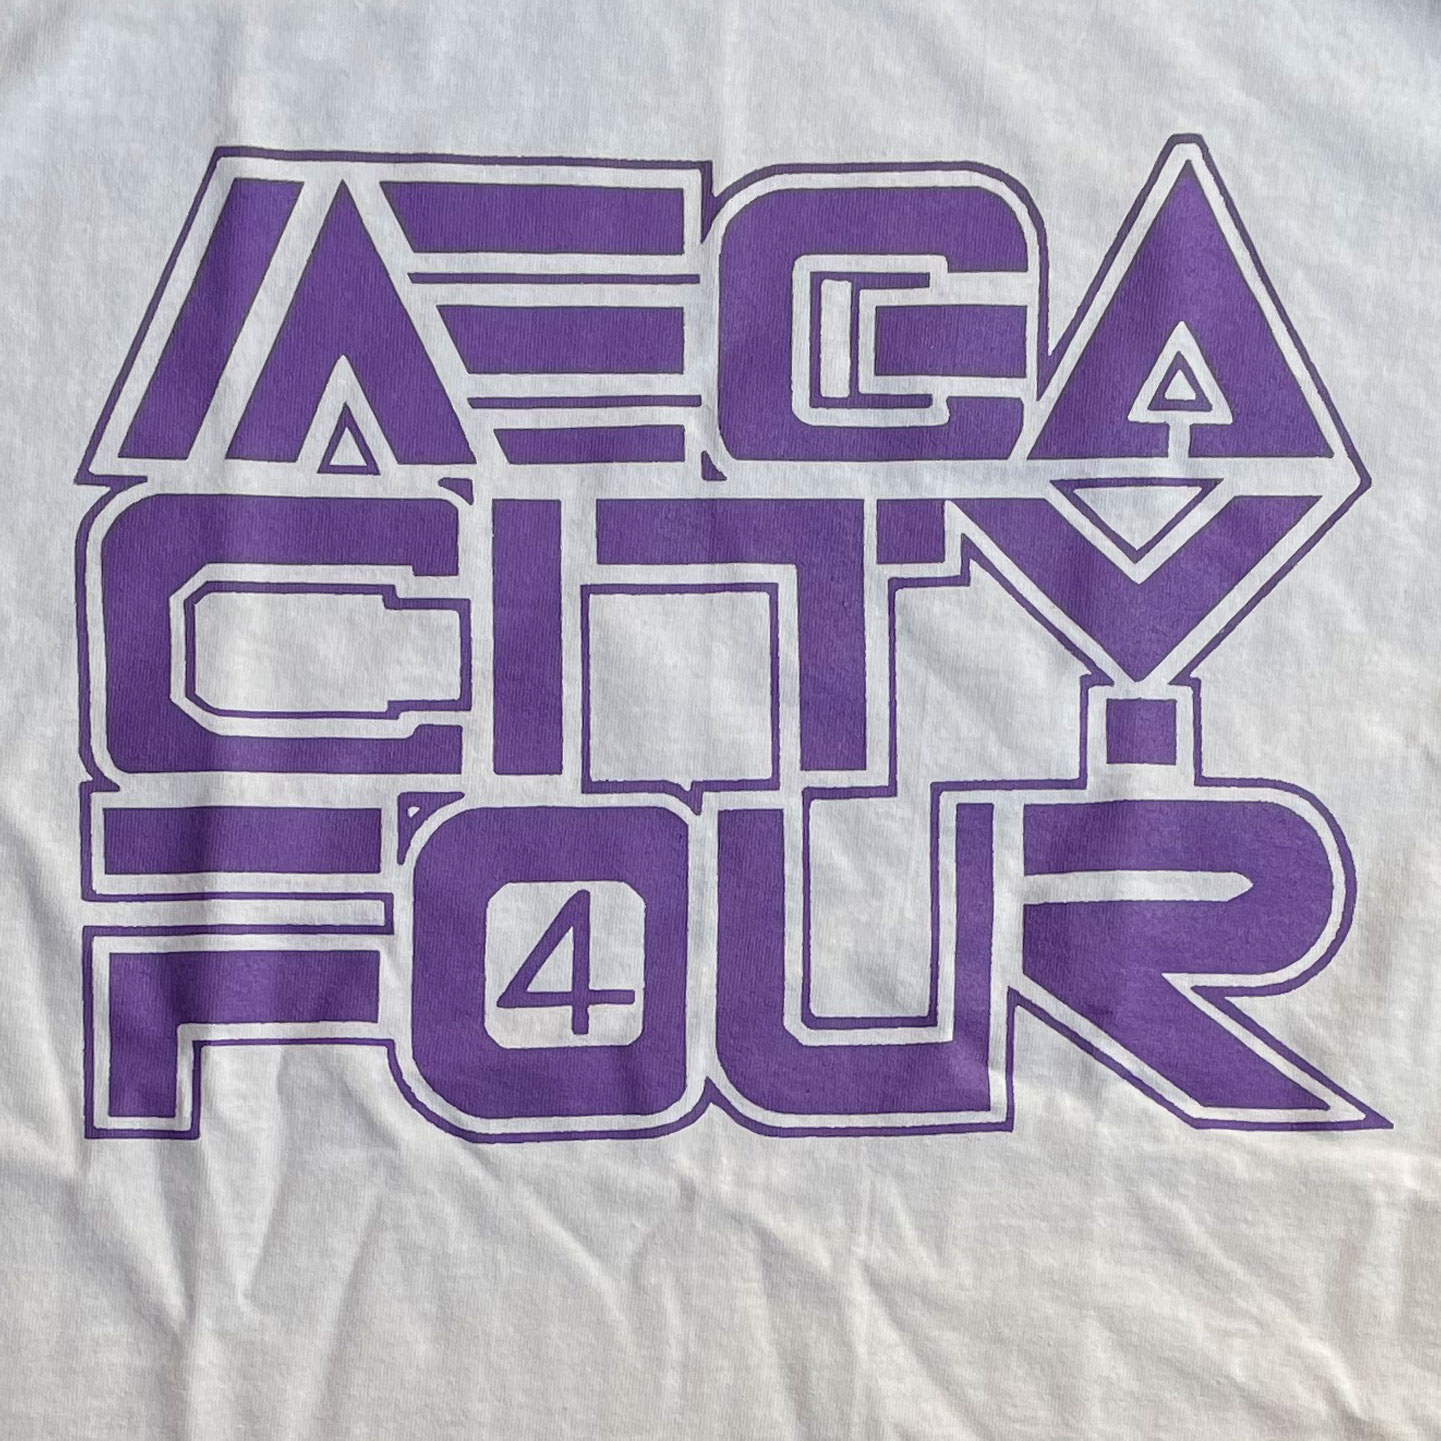 MEGA CITY FOUR Tシャツ LOGO